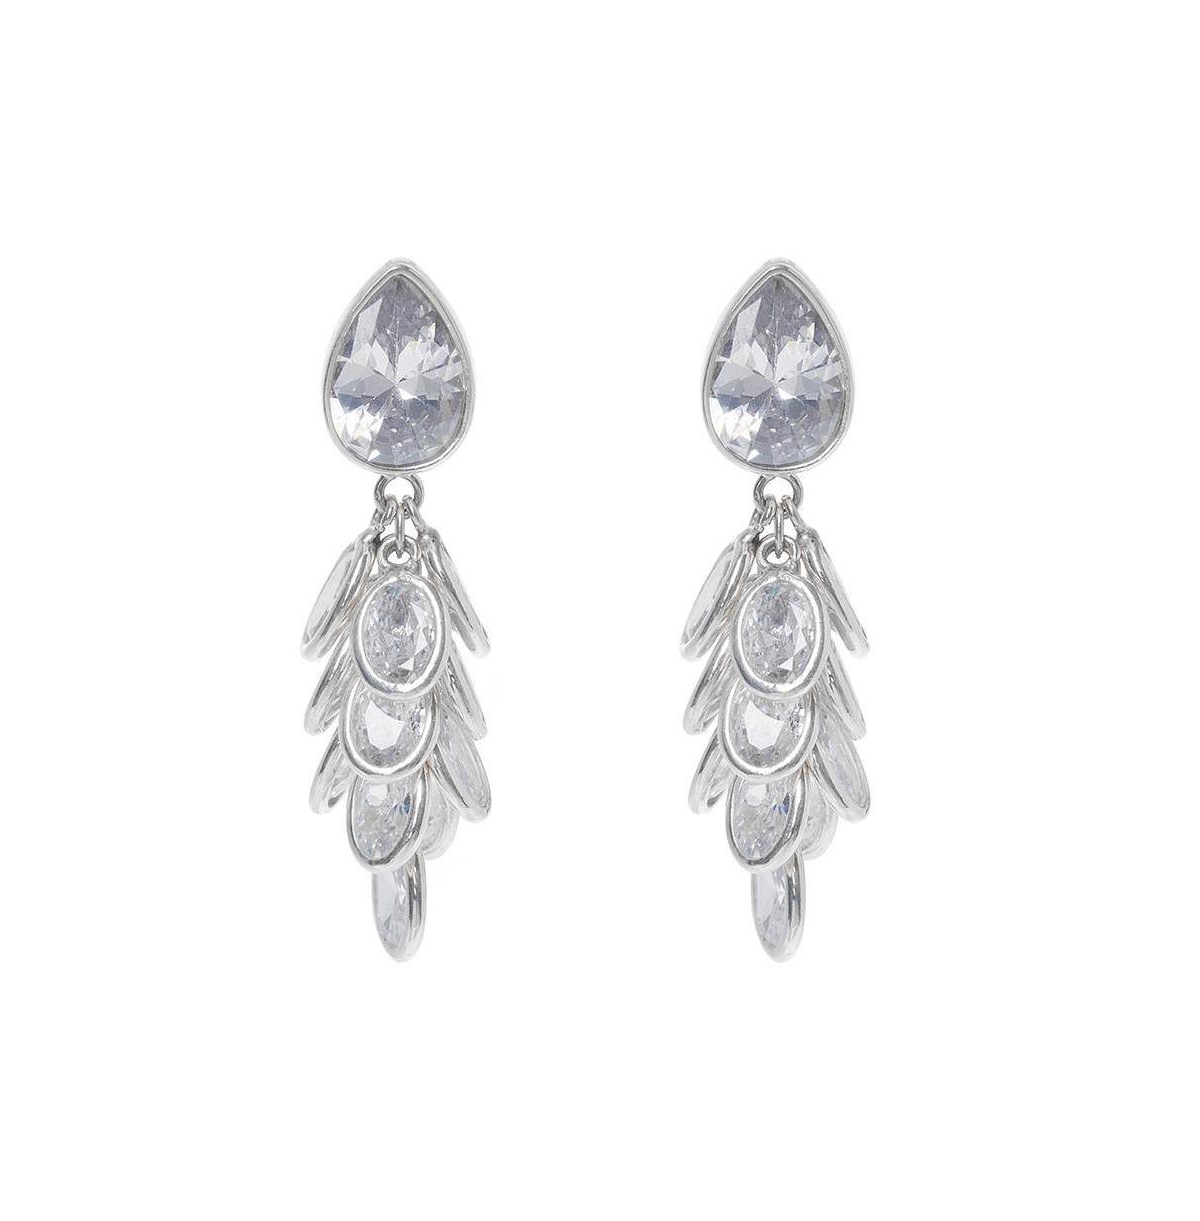 Petite Silver Crystal Drops Earrings - Silver